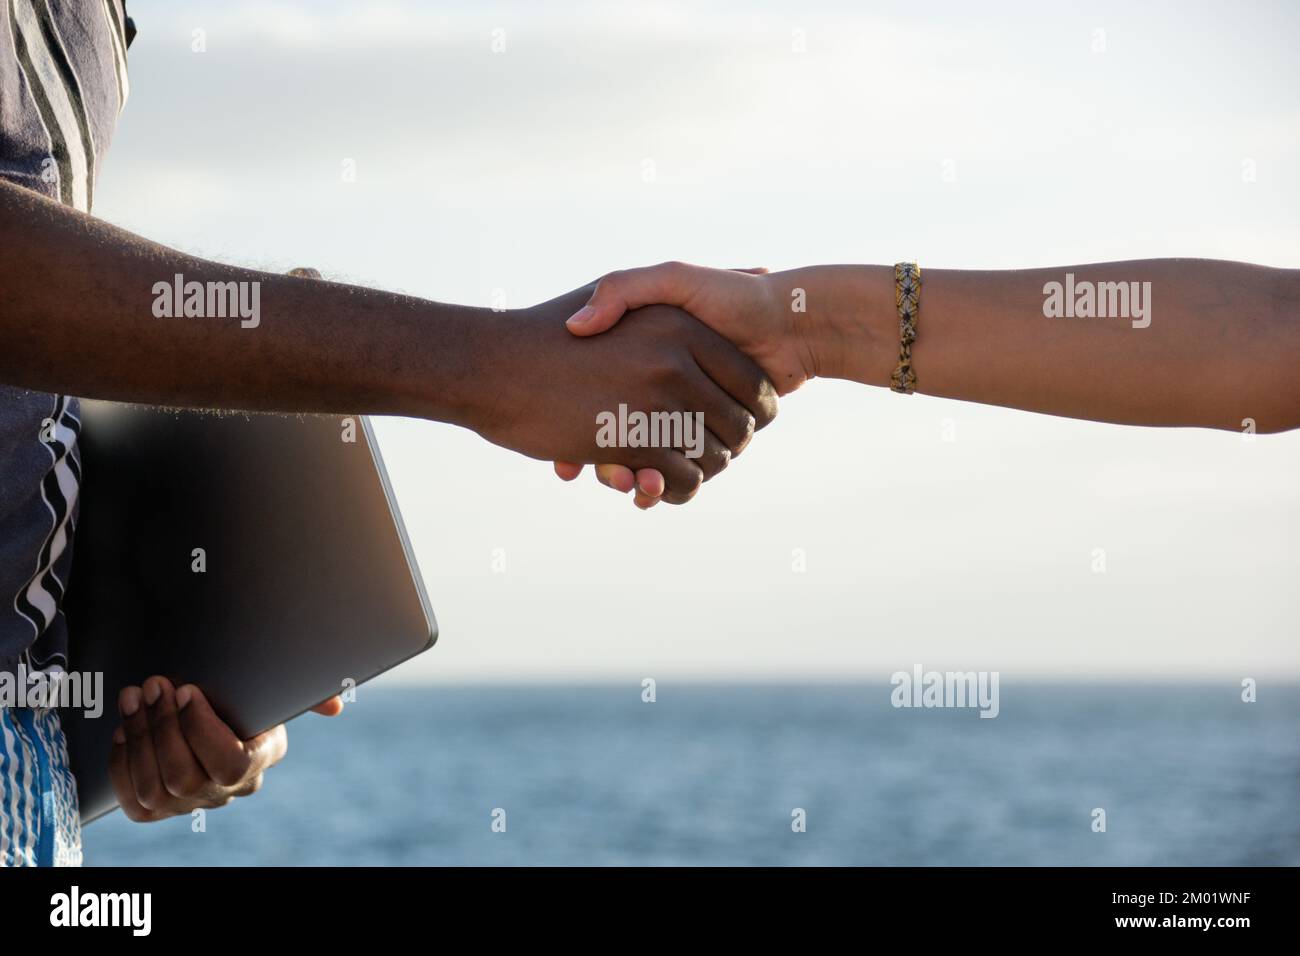 Handshake between African boy and Caucasian girl, partnership concept Stock Photo